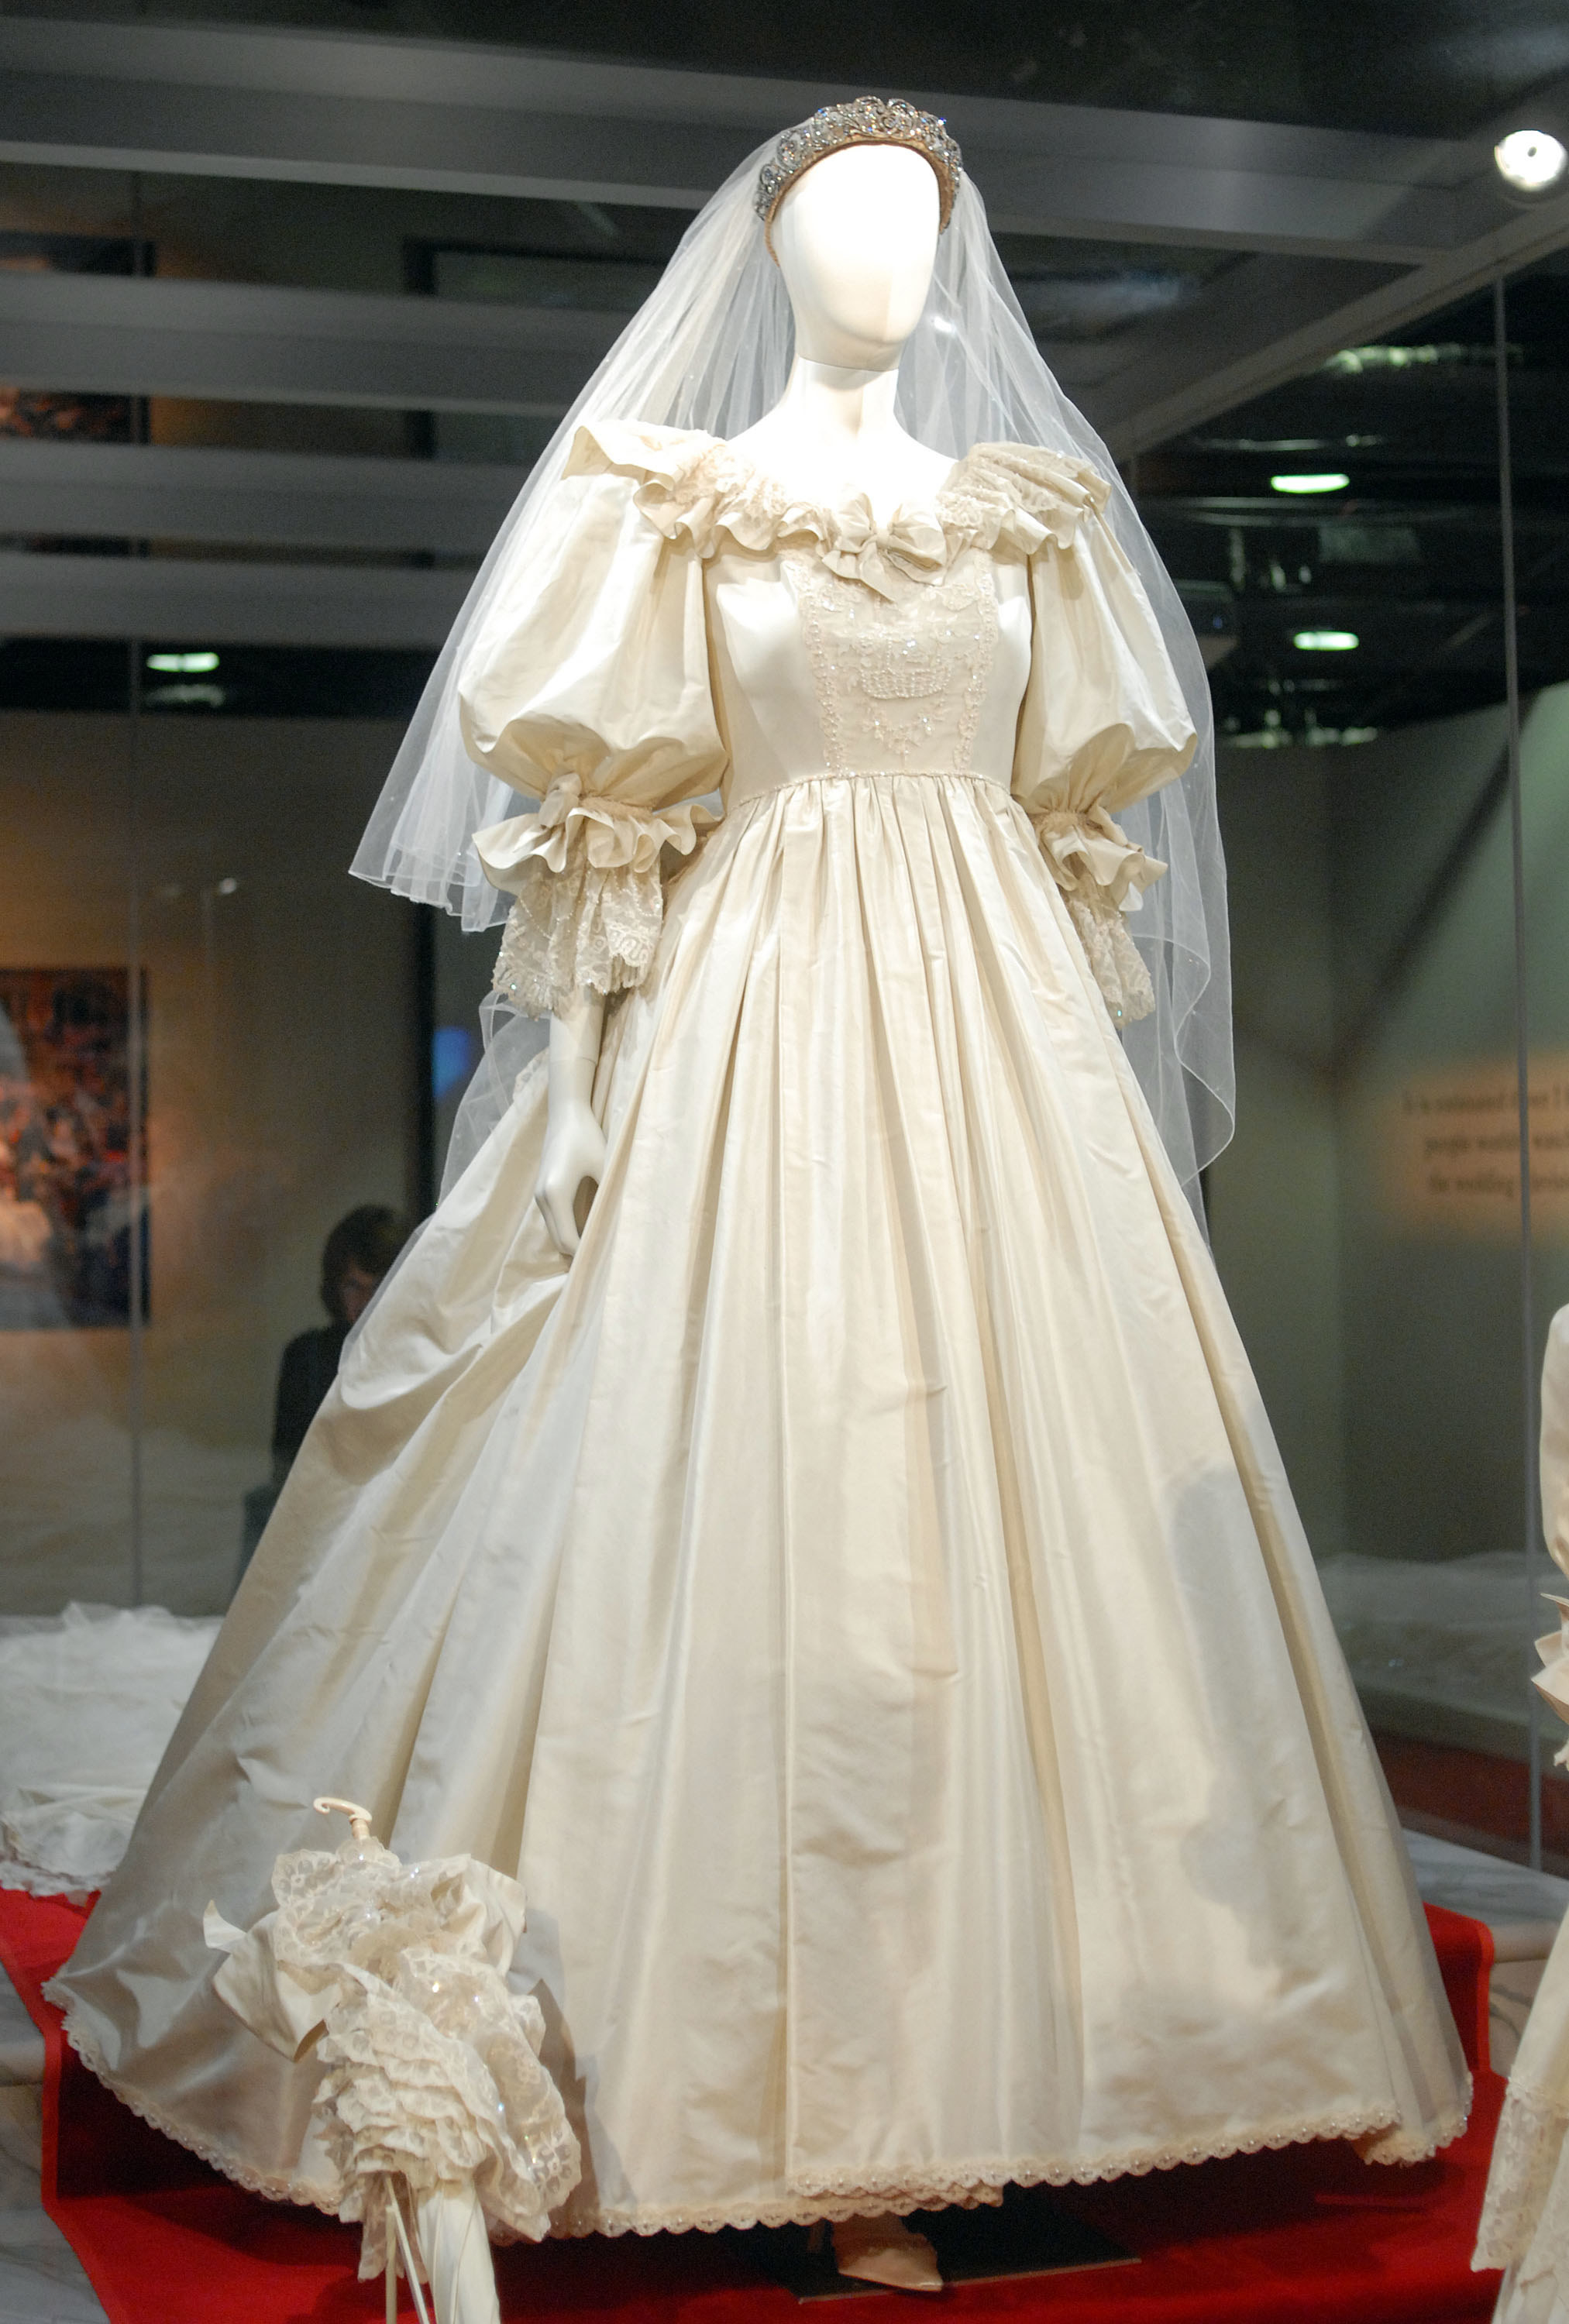 The Princess Diana Wedding Dress "The Crown" Didn't Show